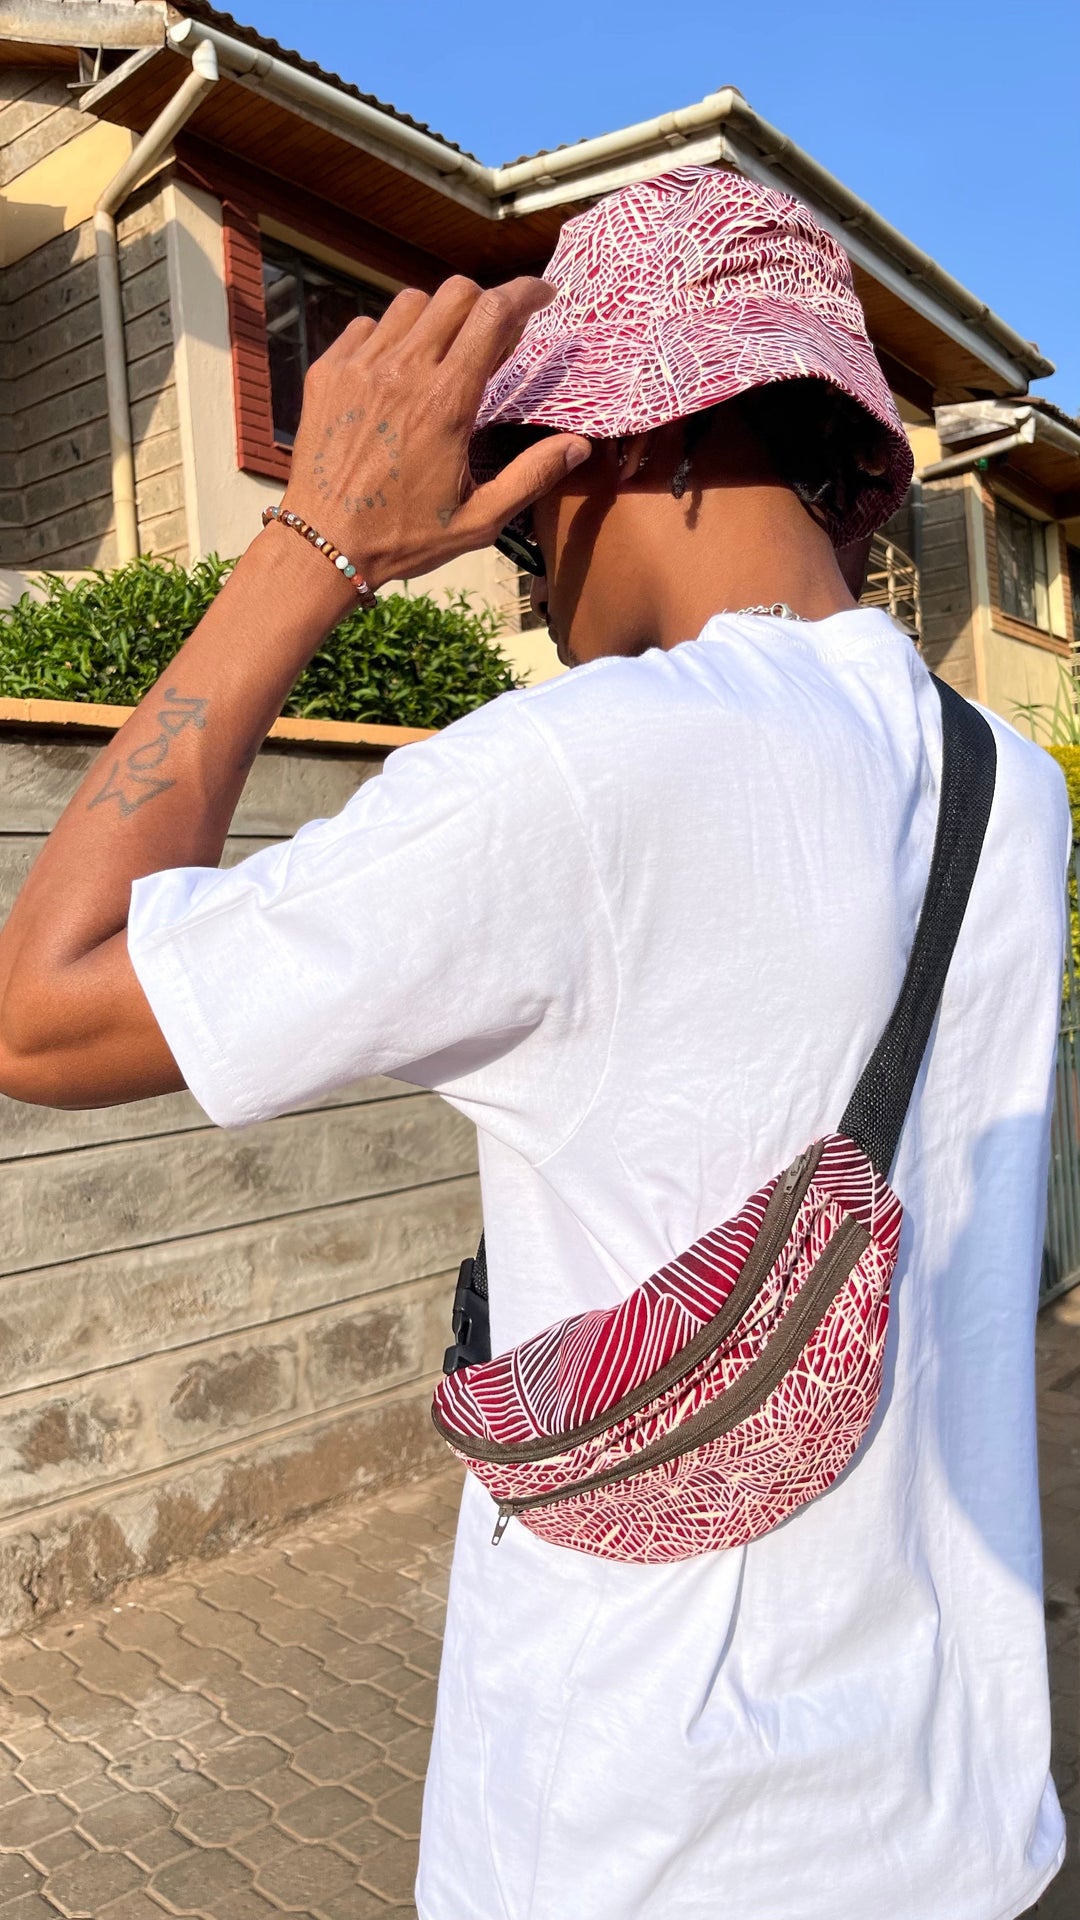 Fannypack ‚Splash Splash‘ für 29€ - mikono.africa Jacken aus Kenia bunte Bomberjacke Partyjacke faire sozial nachhaltig designed in Kenia